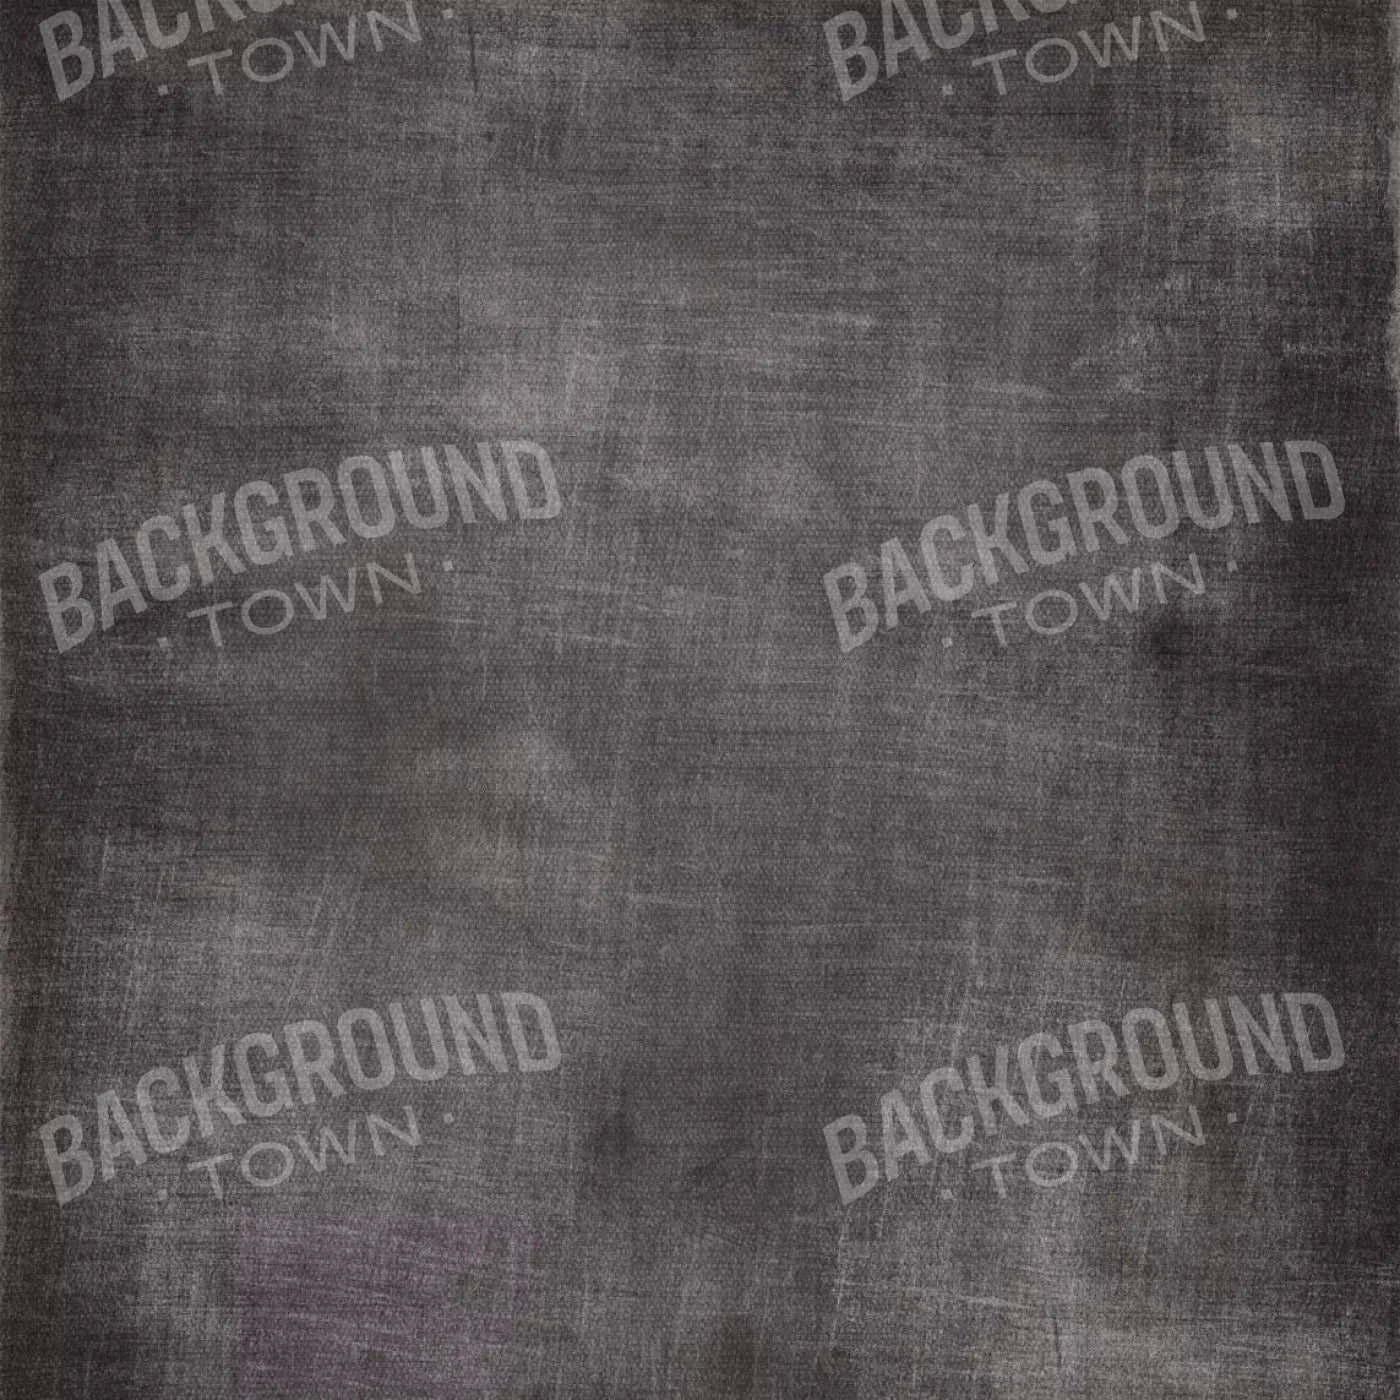 Blackboard 10X10 Ultracloth ( 120 X Inch ) Backdrop